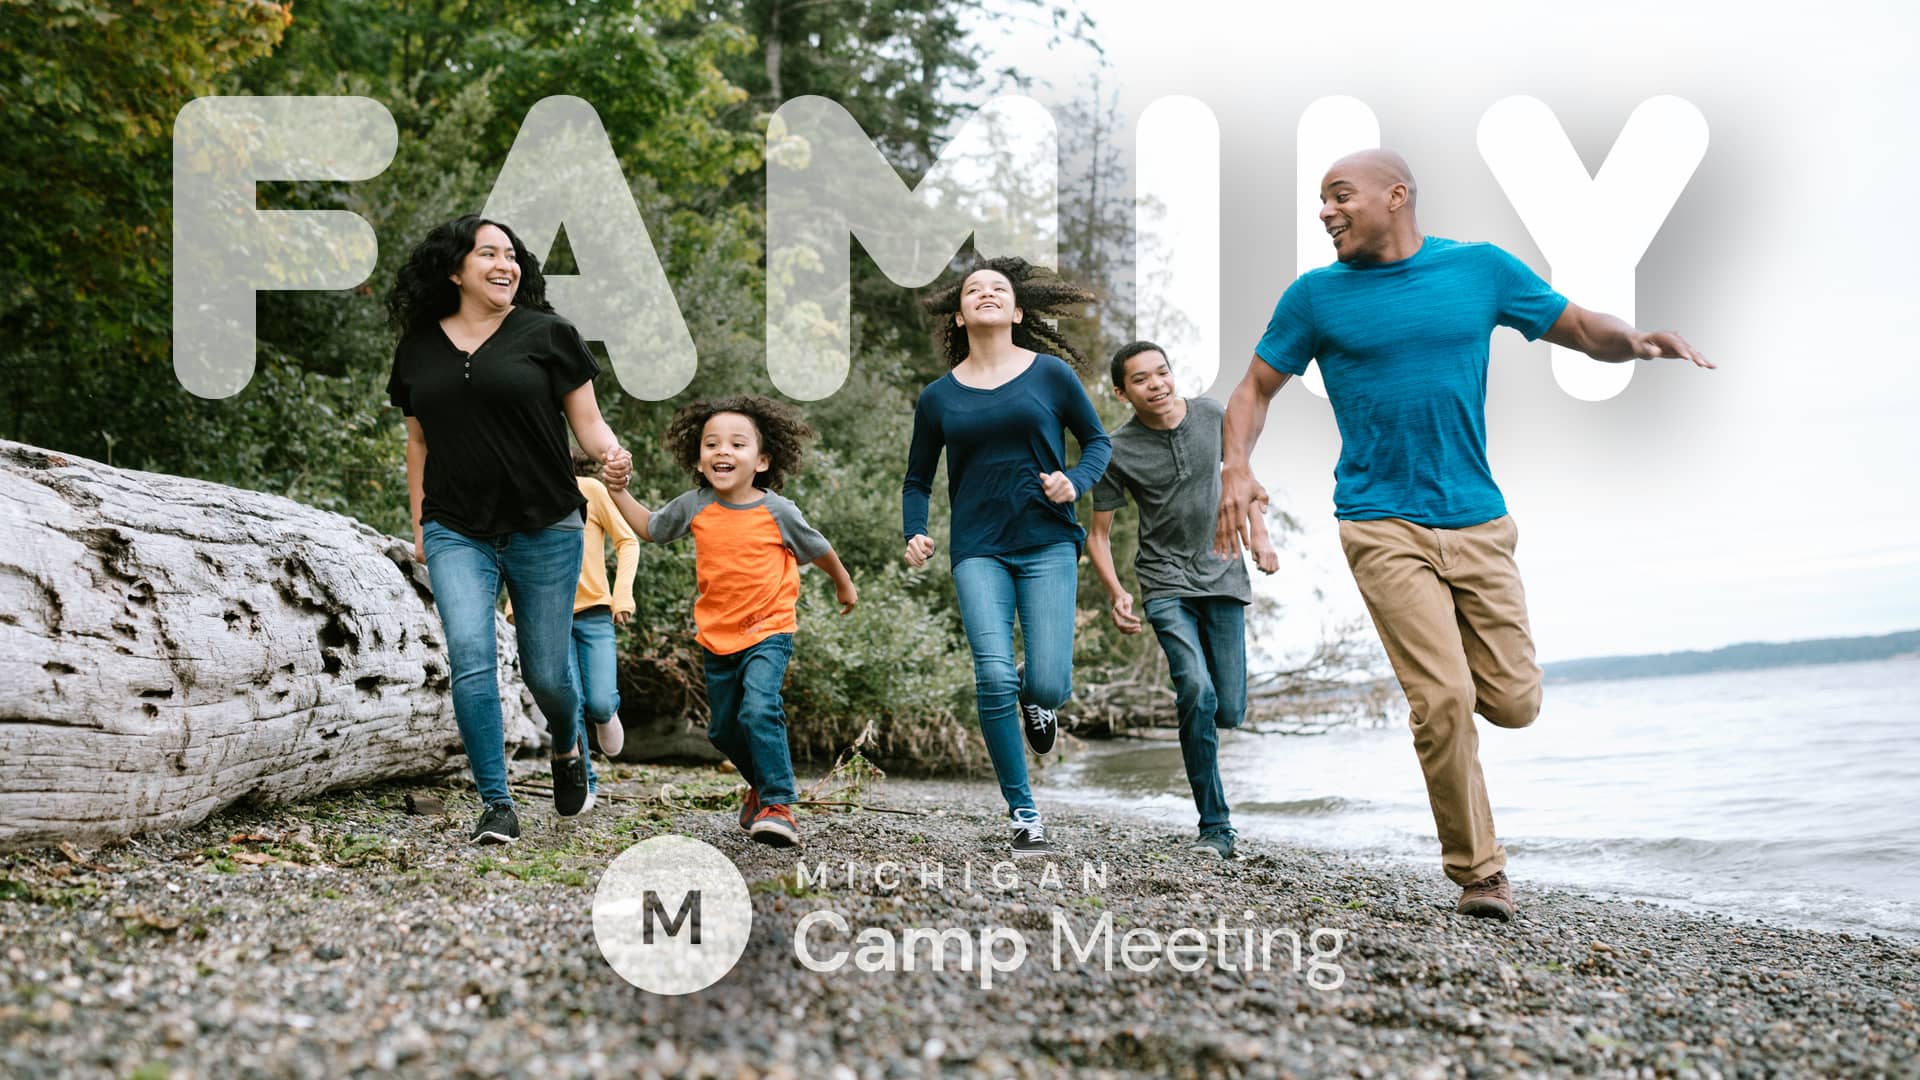 Misda Camp Meeting 2021 Families on Vimeo